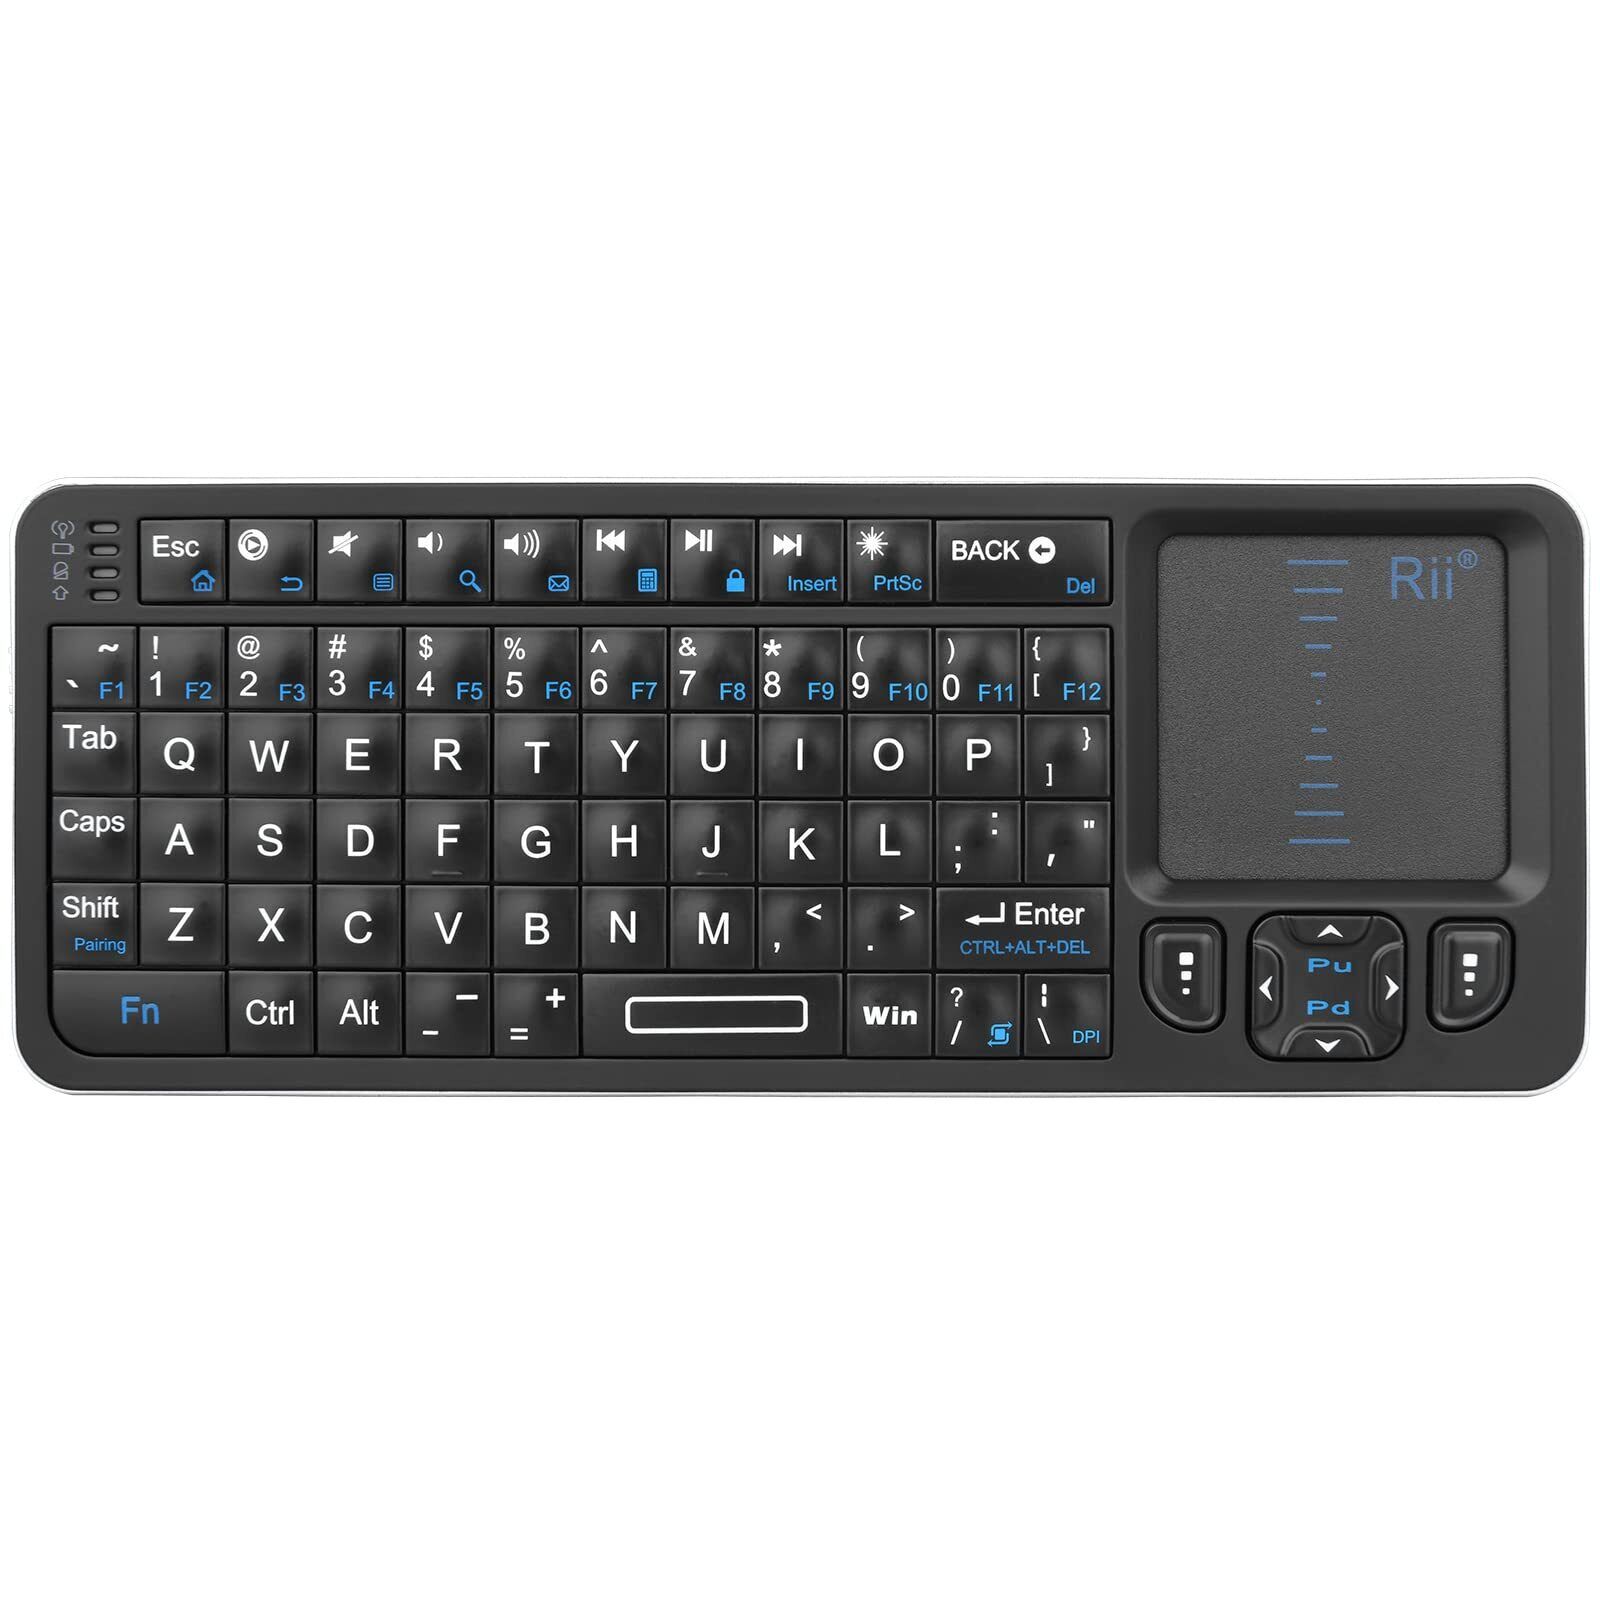 Rii K06 Mini Bluetooth Keyboard,Backlit Wireless Keyboard with IR Learning, Port